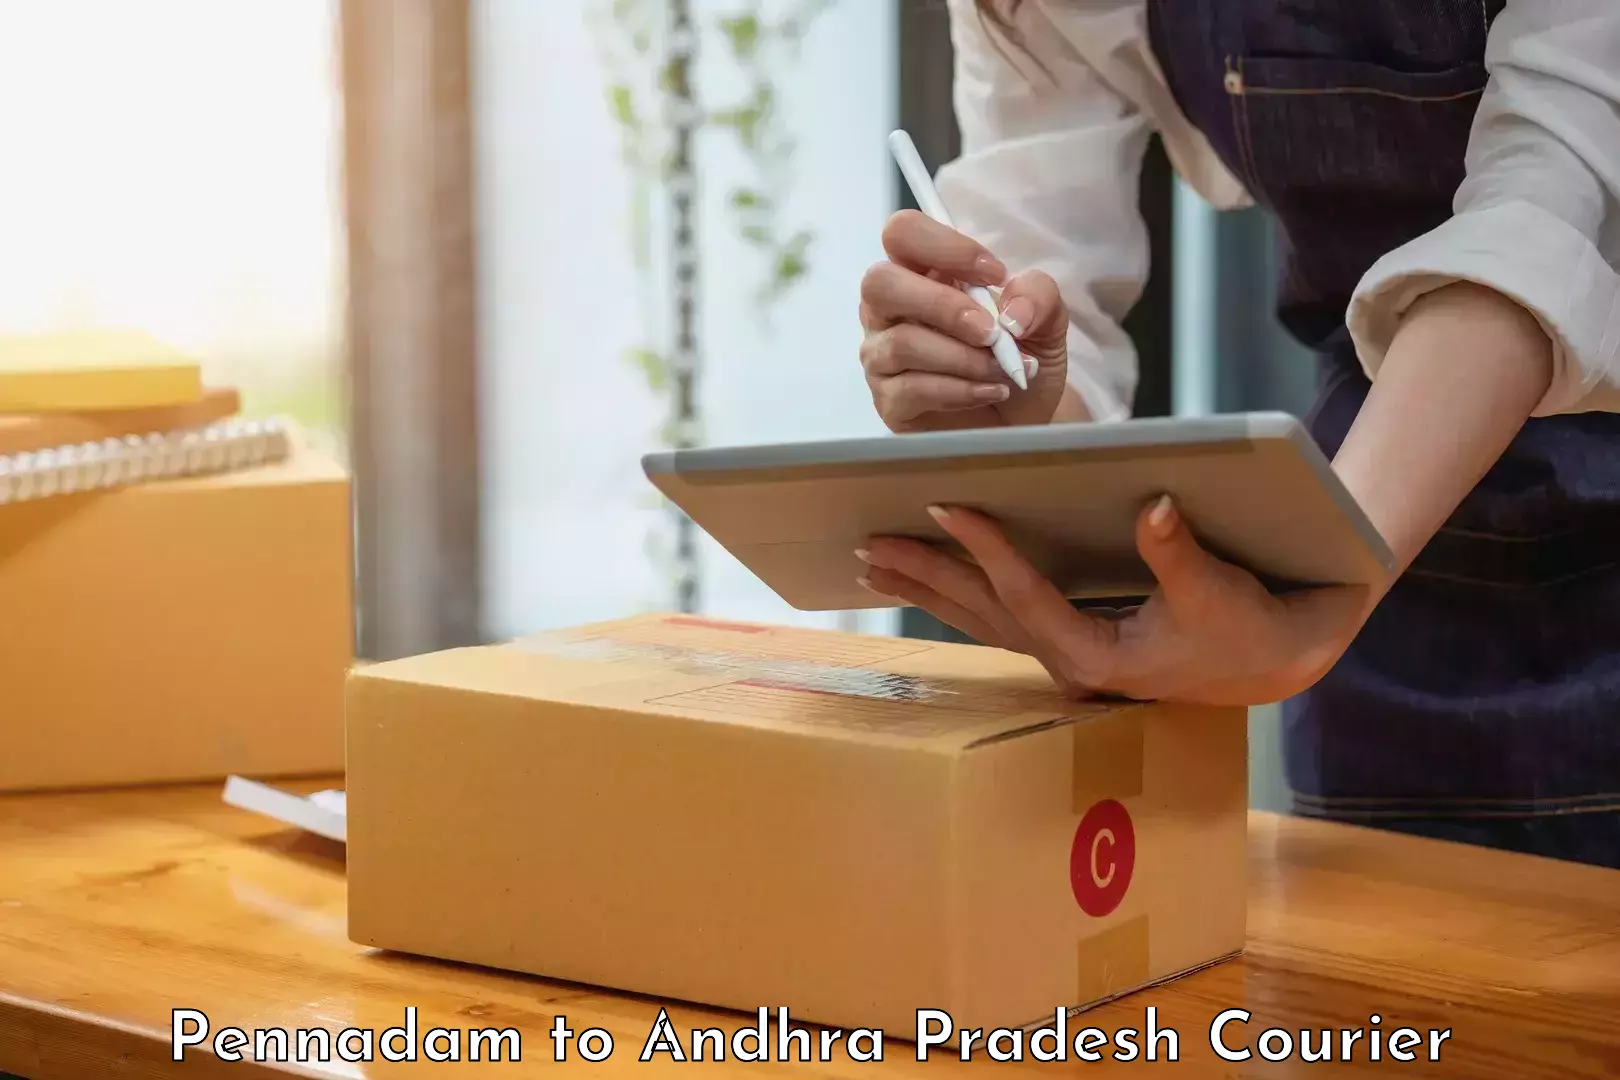 Courier service innovation Pennadam to Andhra Pradesh